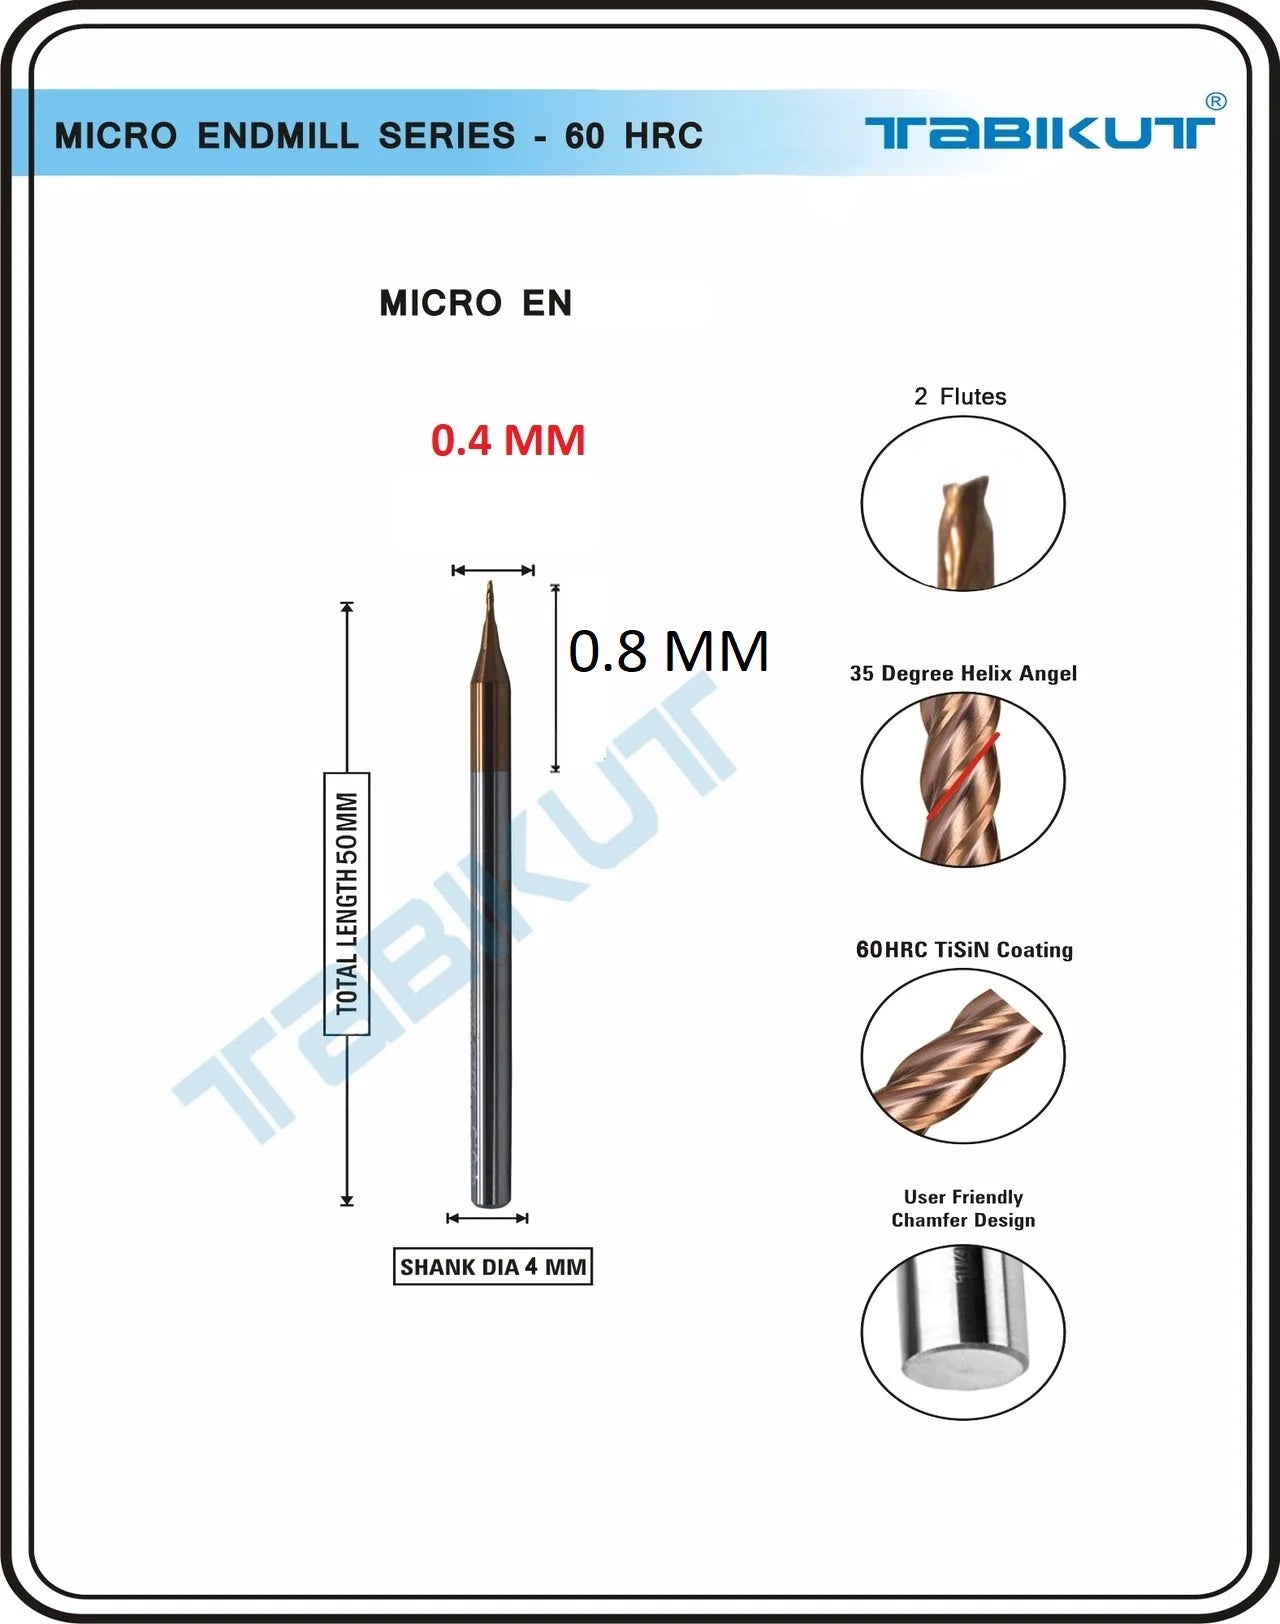 Micro Endmill 0.4 Mm 4mm Shank 2 Flutes (60 HRC)